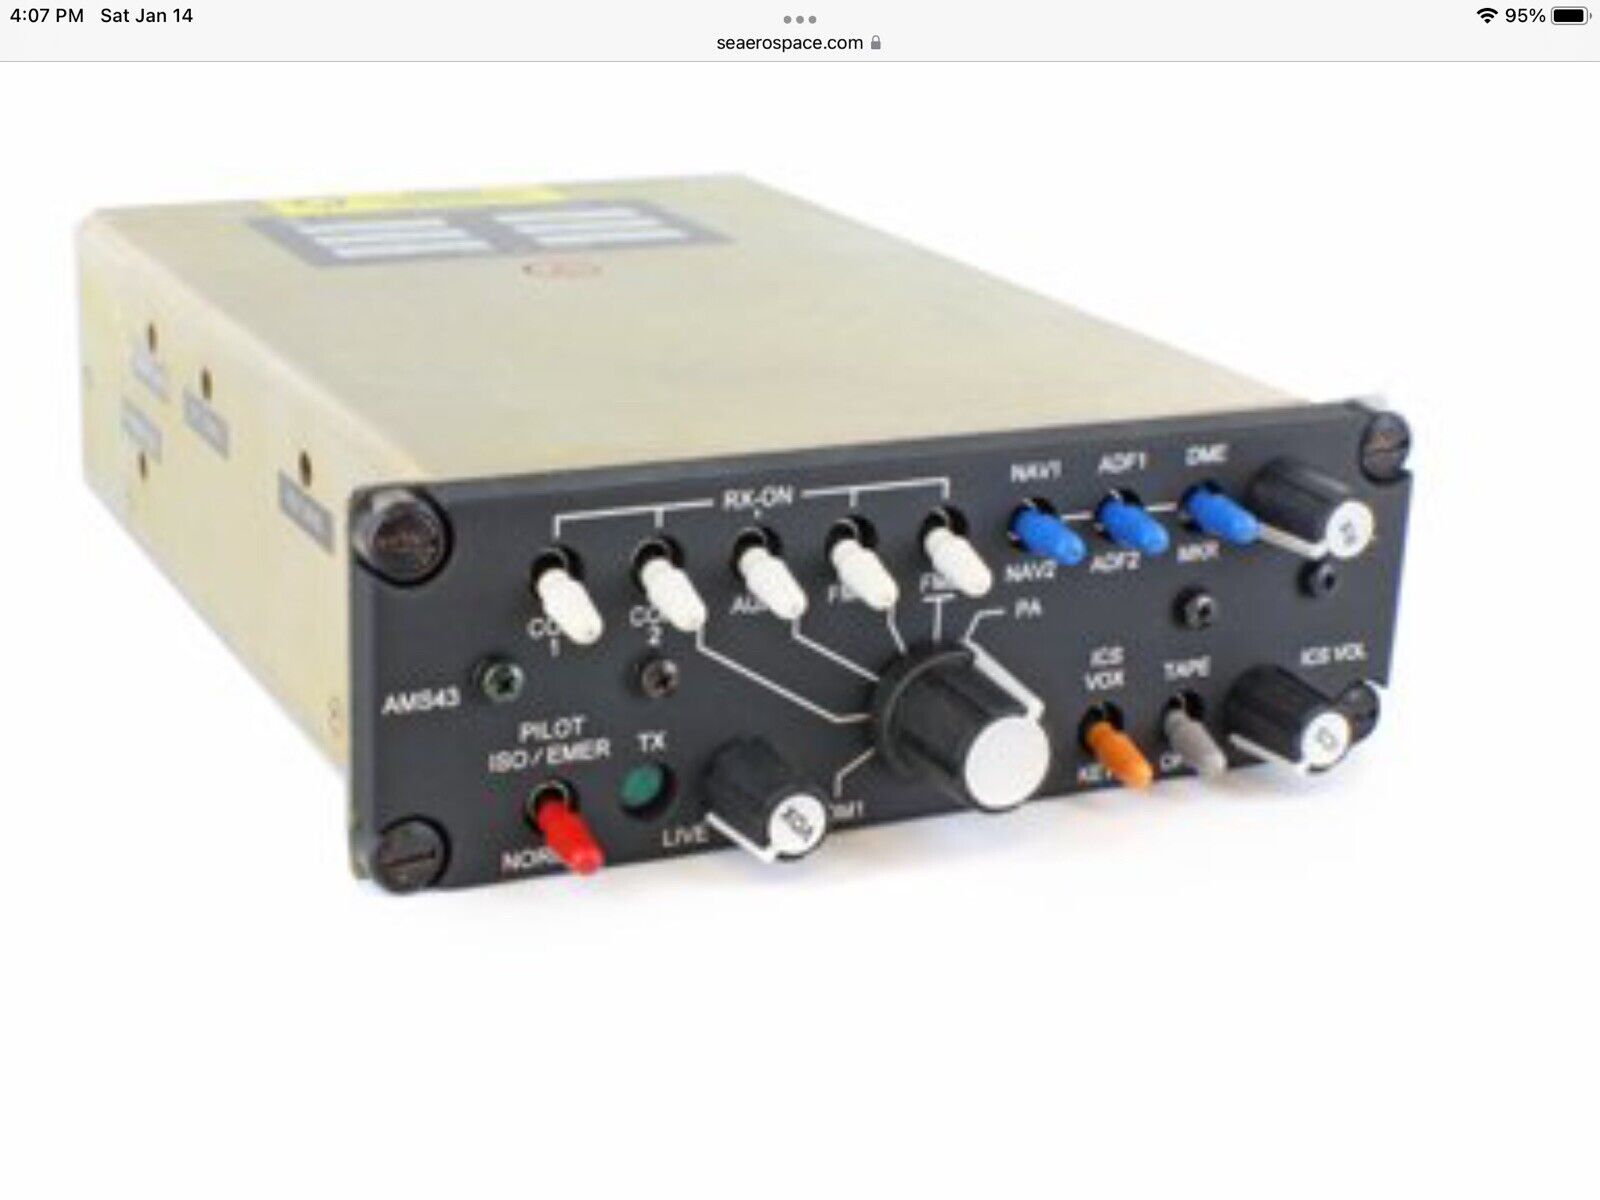 Cobham/AEM AMS43 Aircraft Audio Amplifier/selector (New)